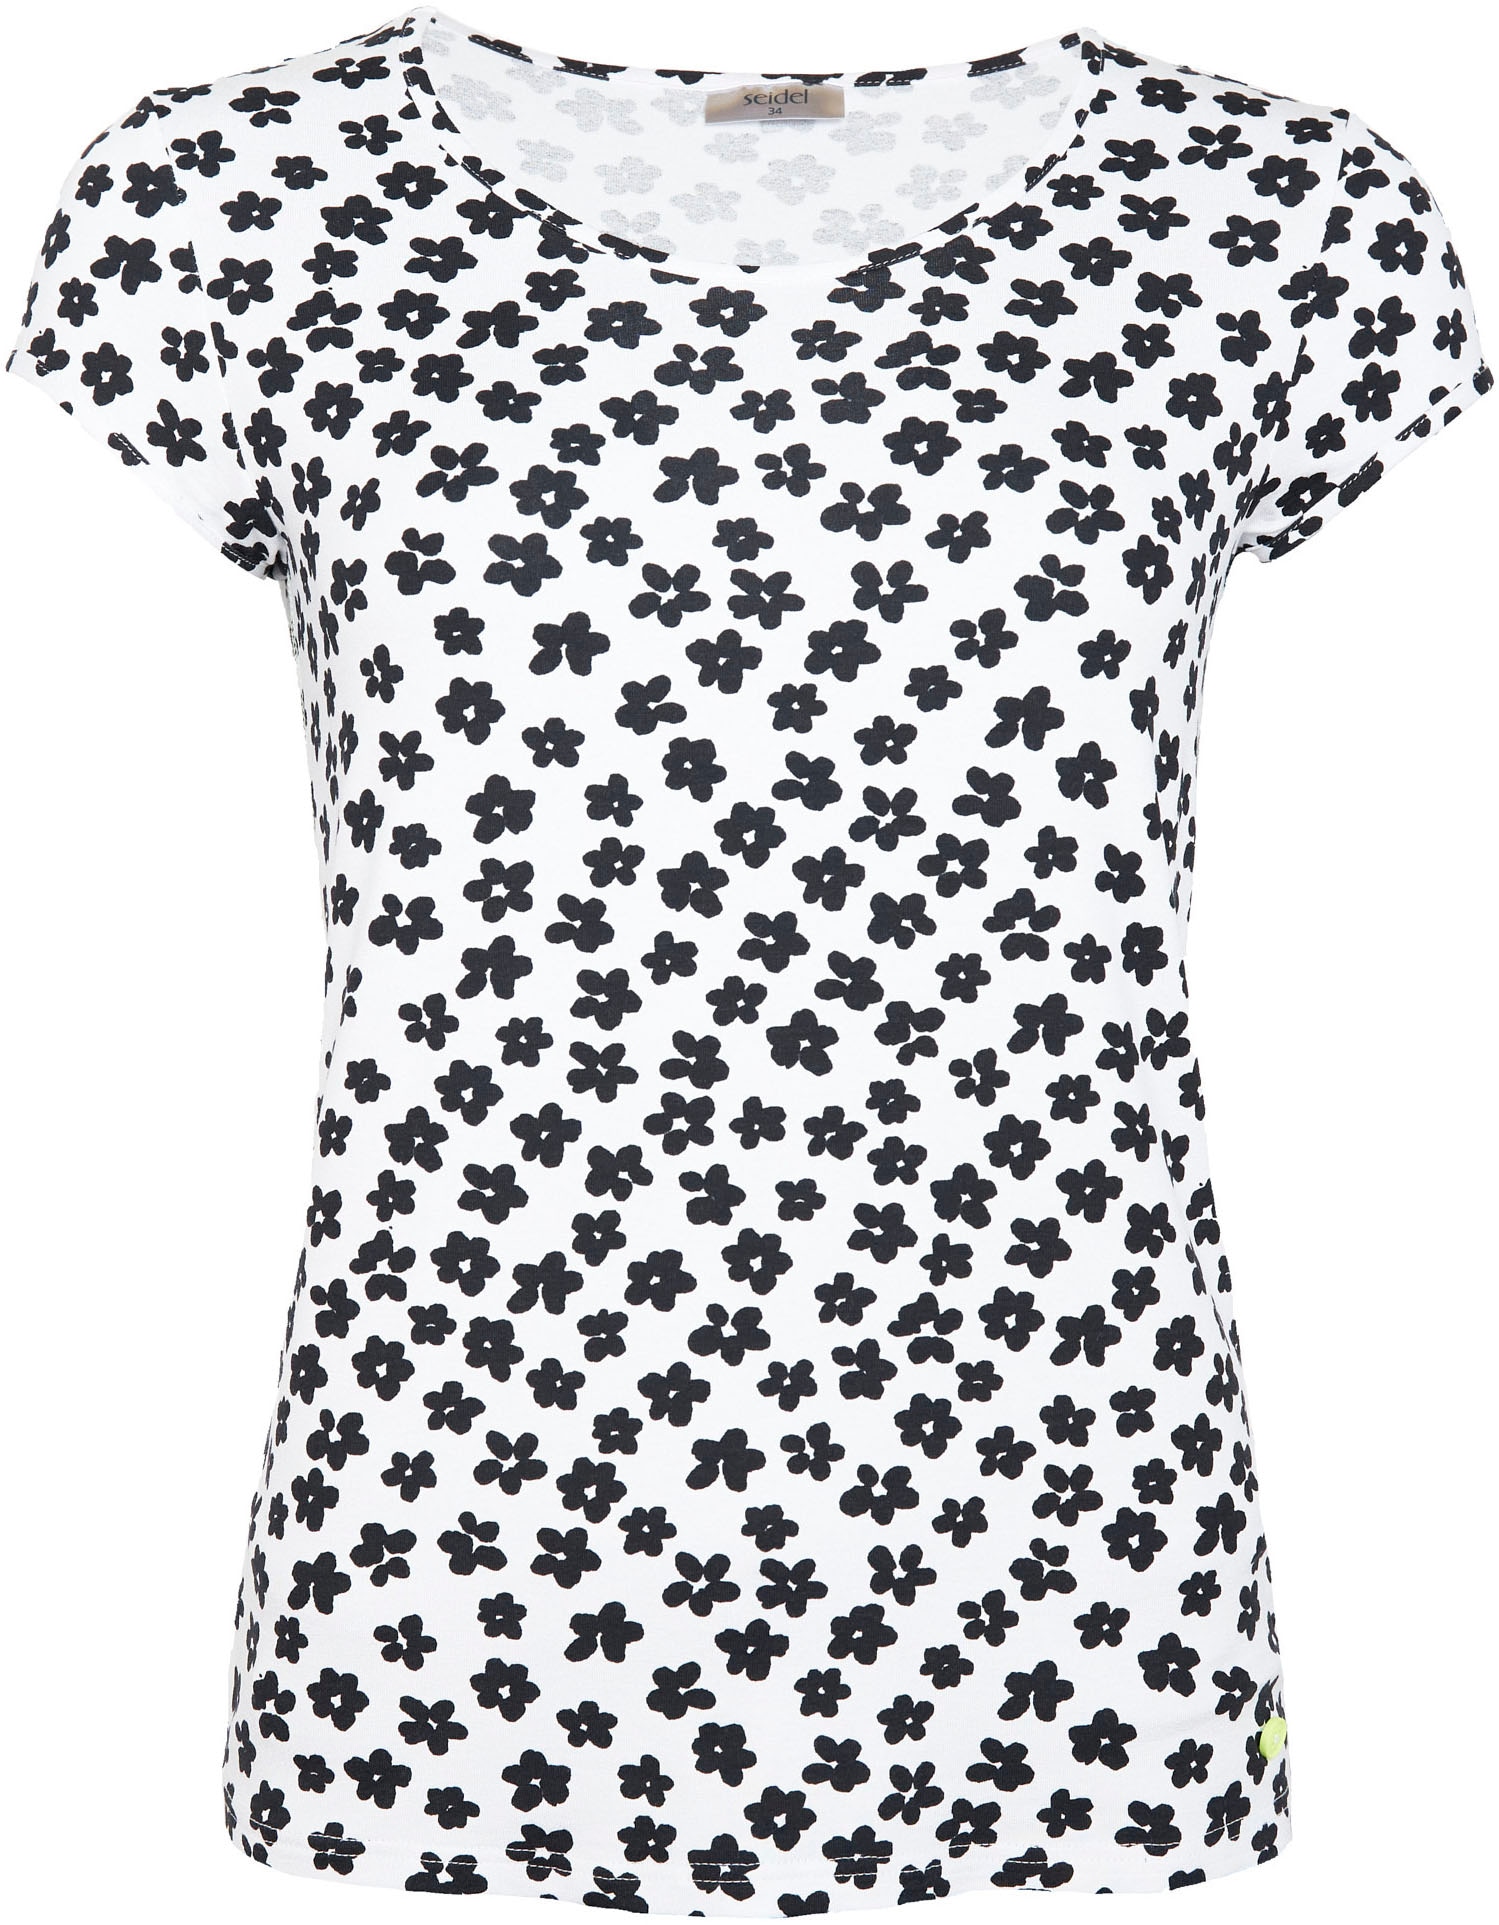 Seidel Moden T-Shirt, Blumen-Allover-Print bei mit OTTO in Made White, and Black in online Germany